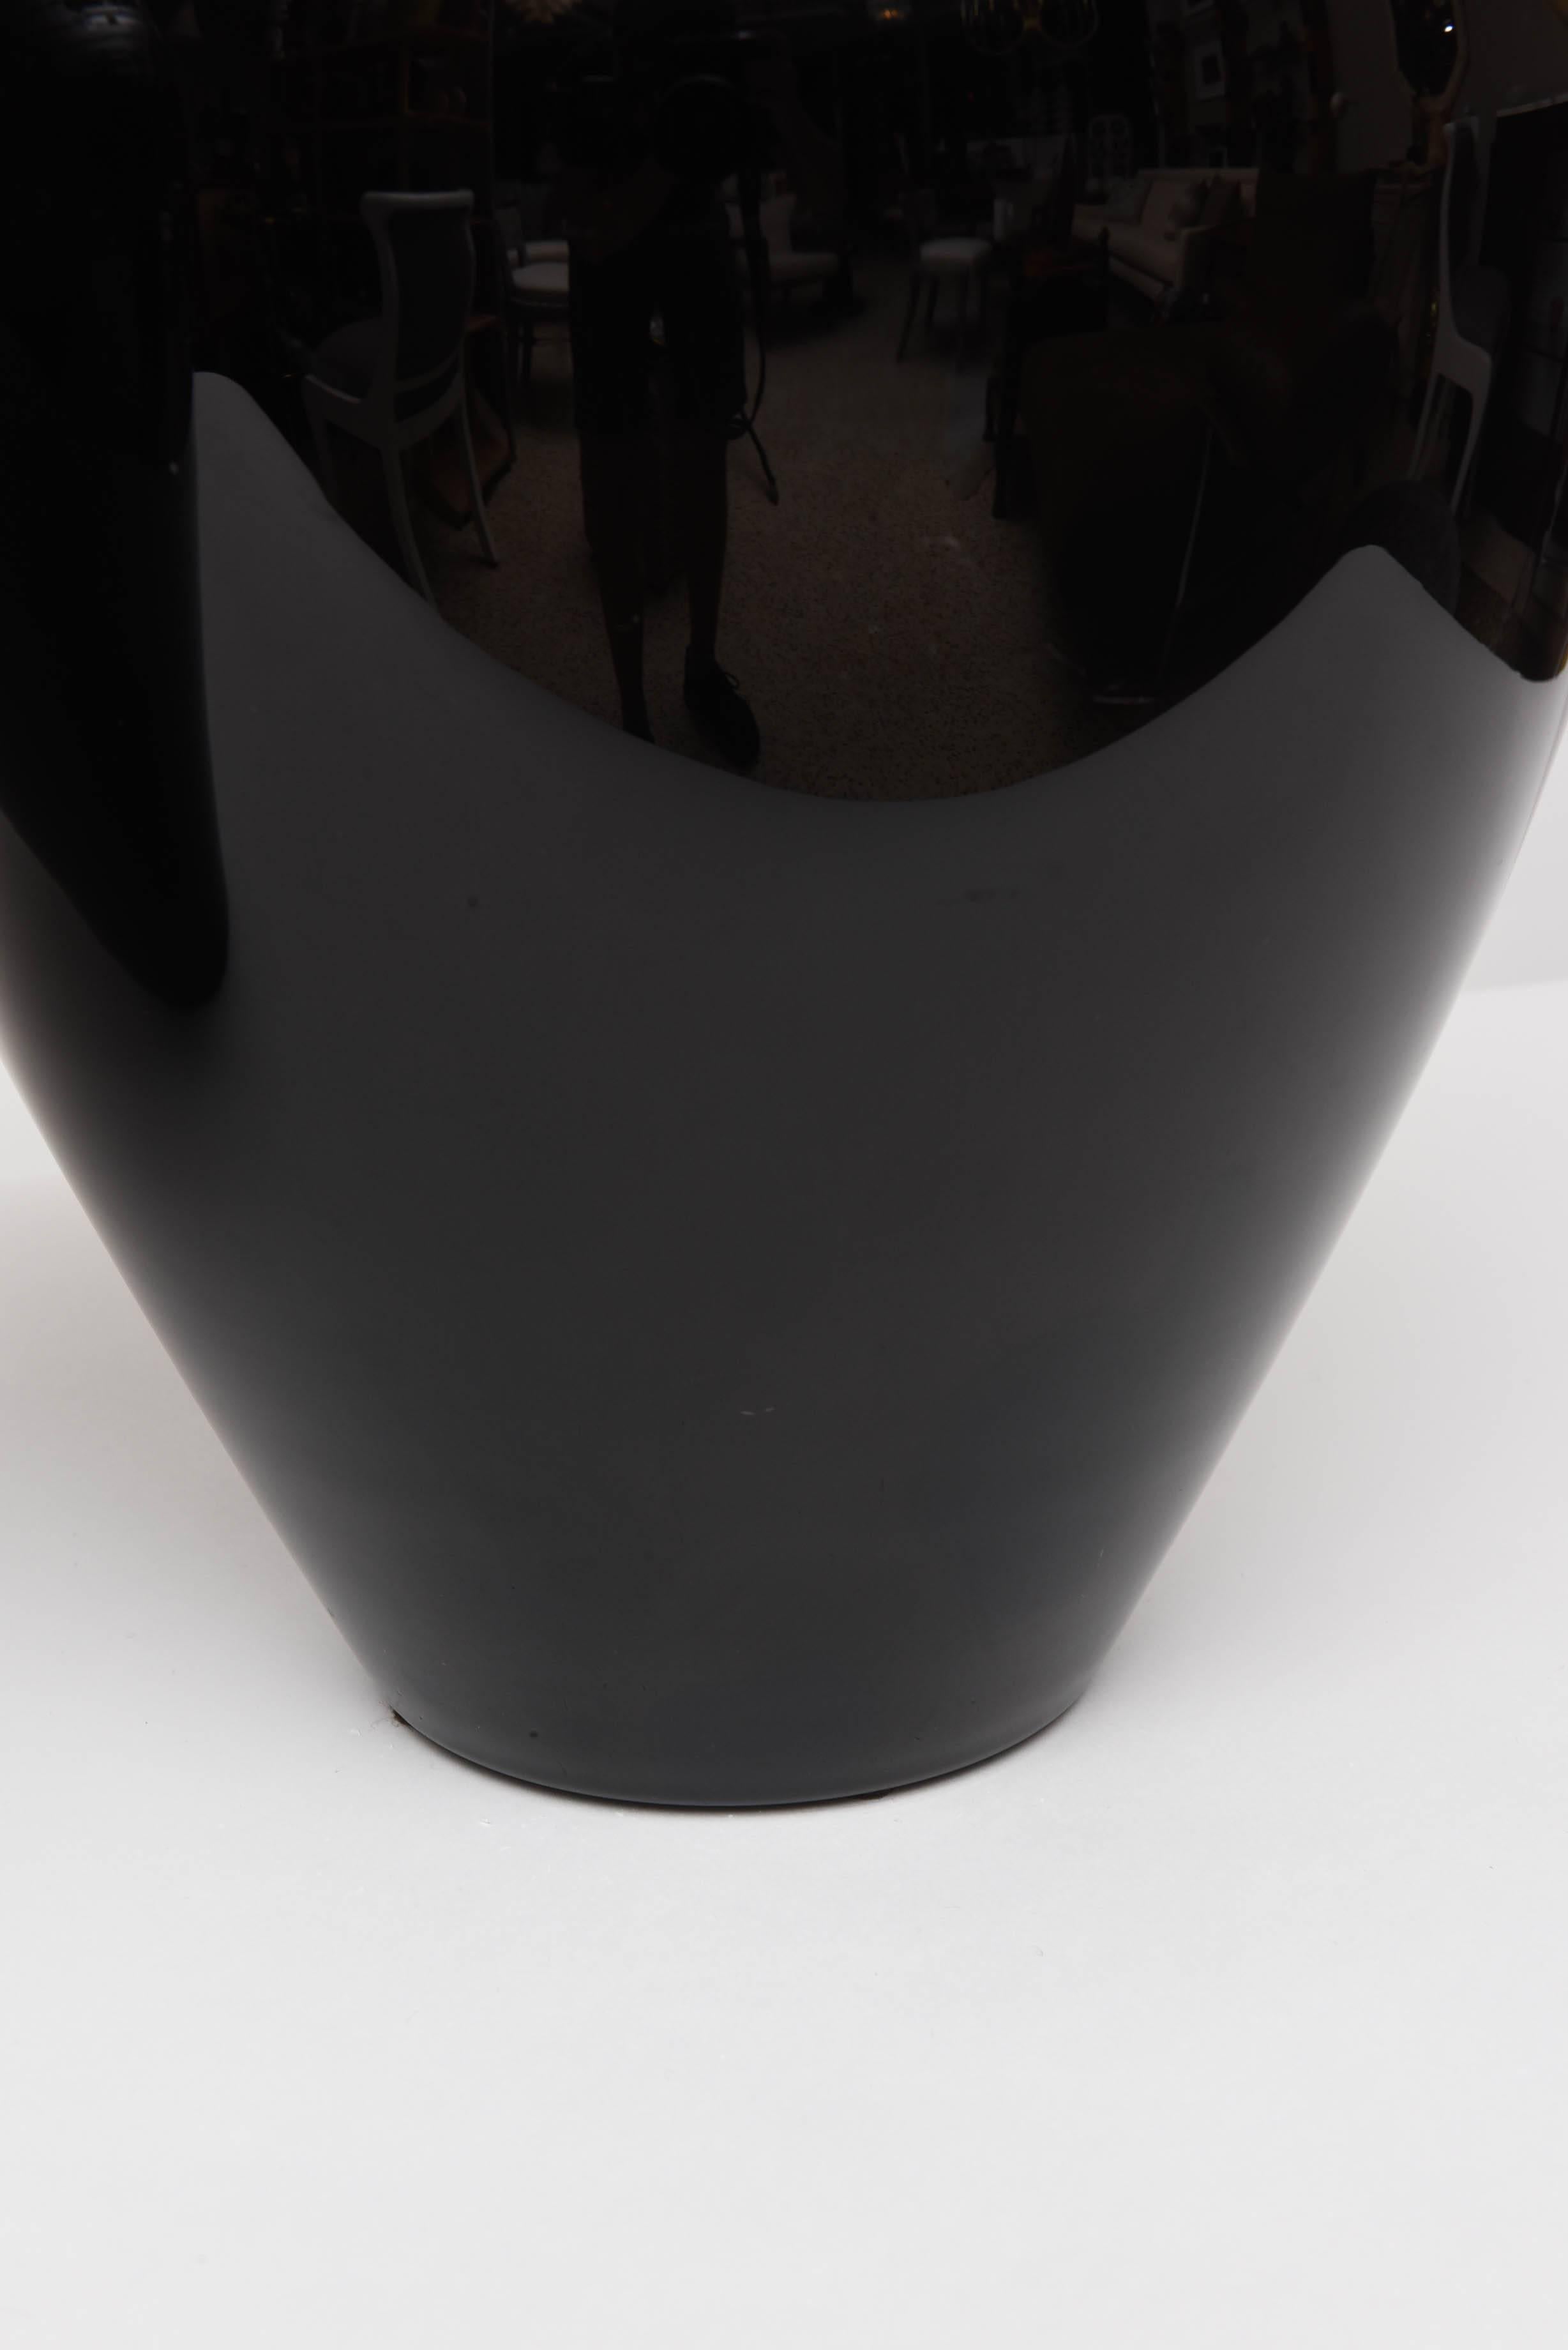 large black vases